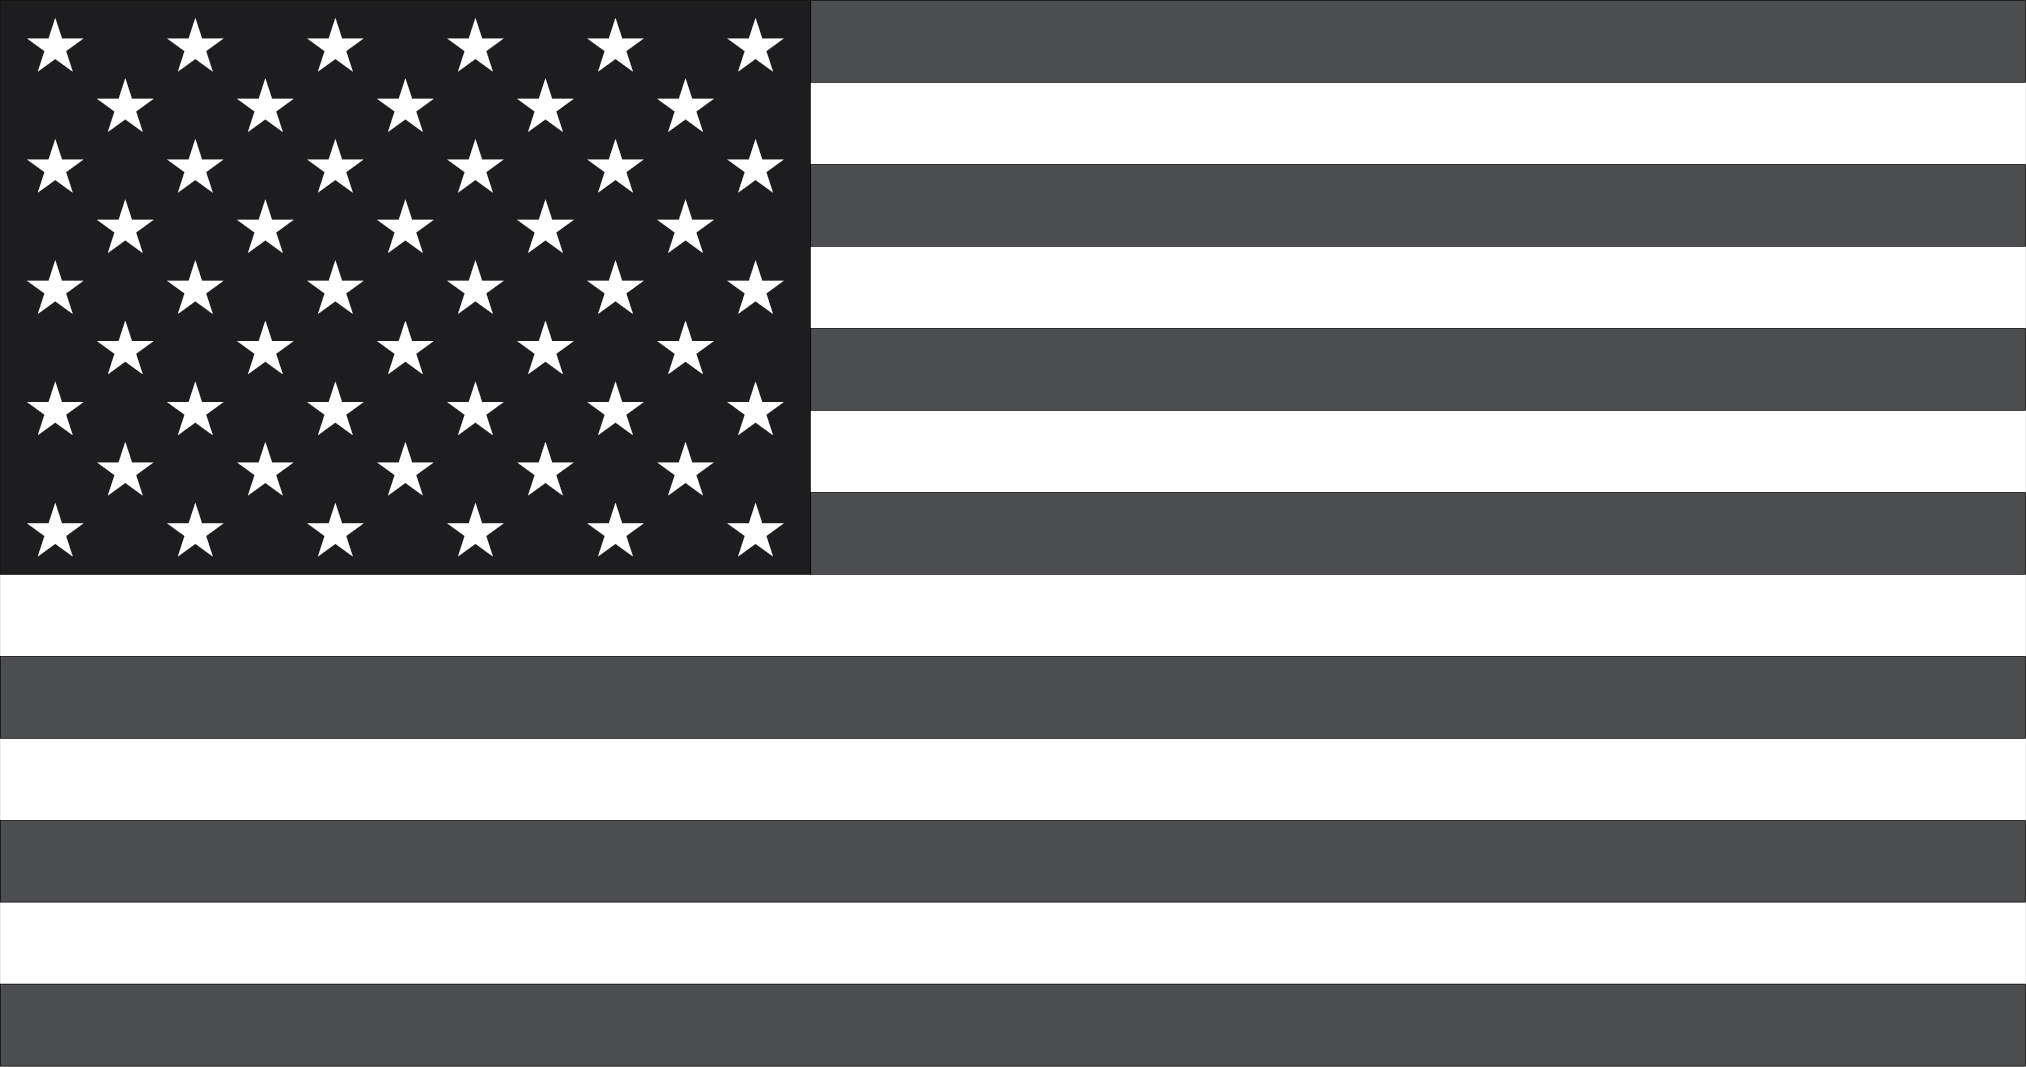 The U.S. flag.